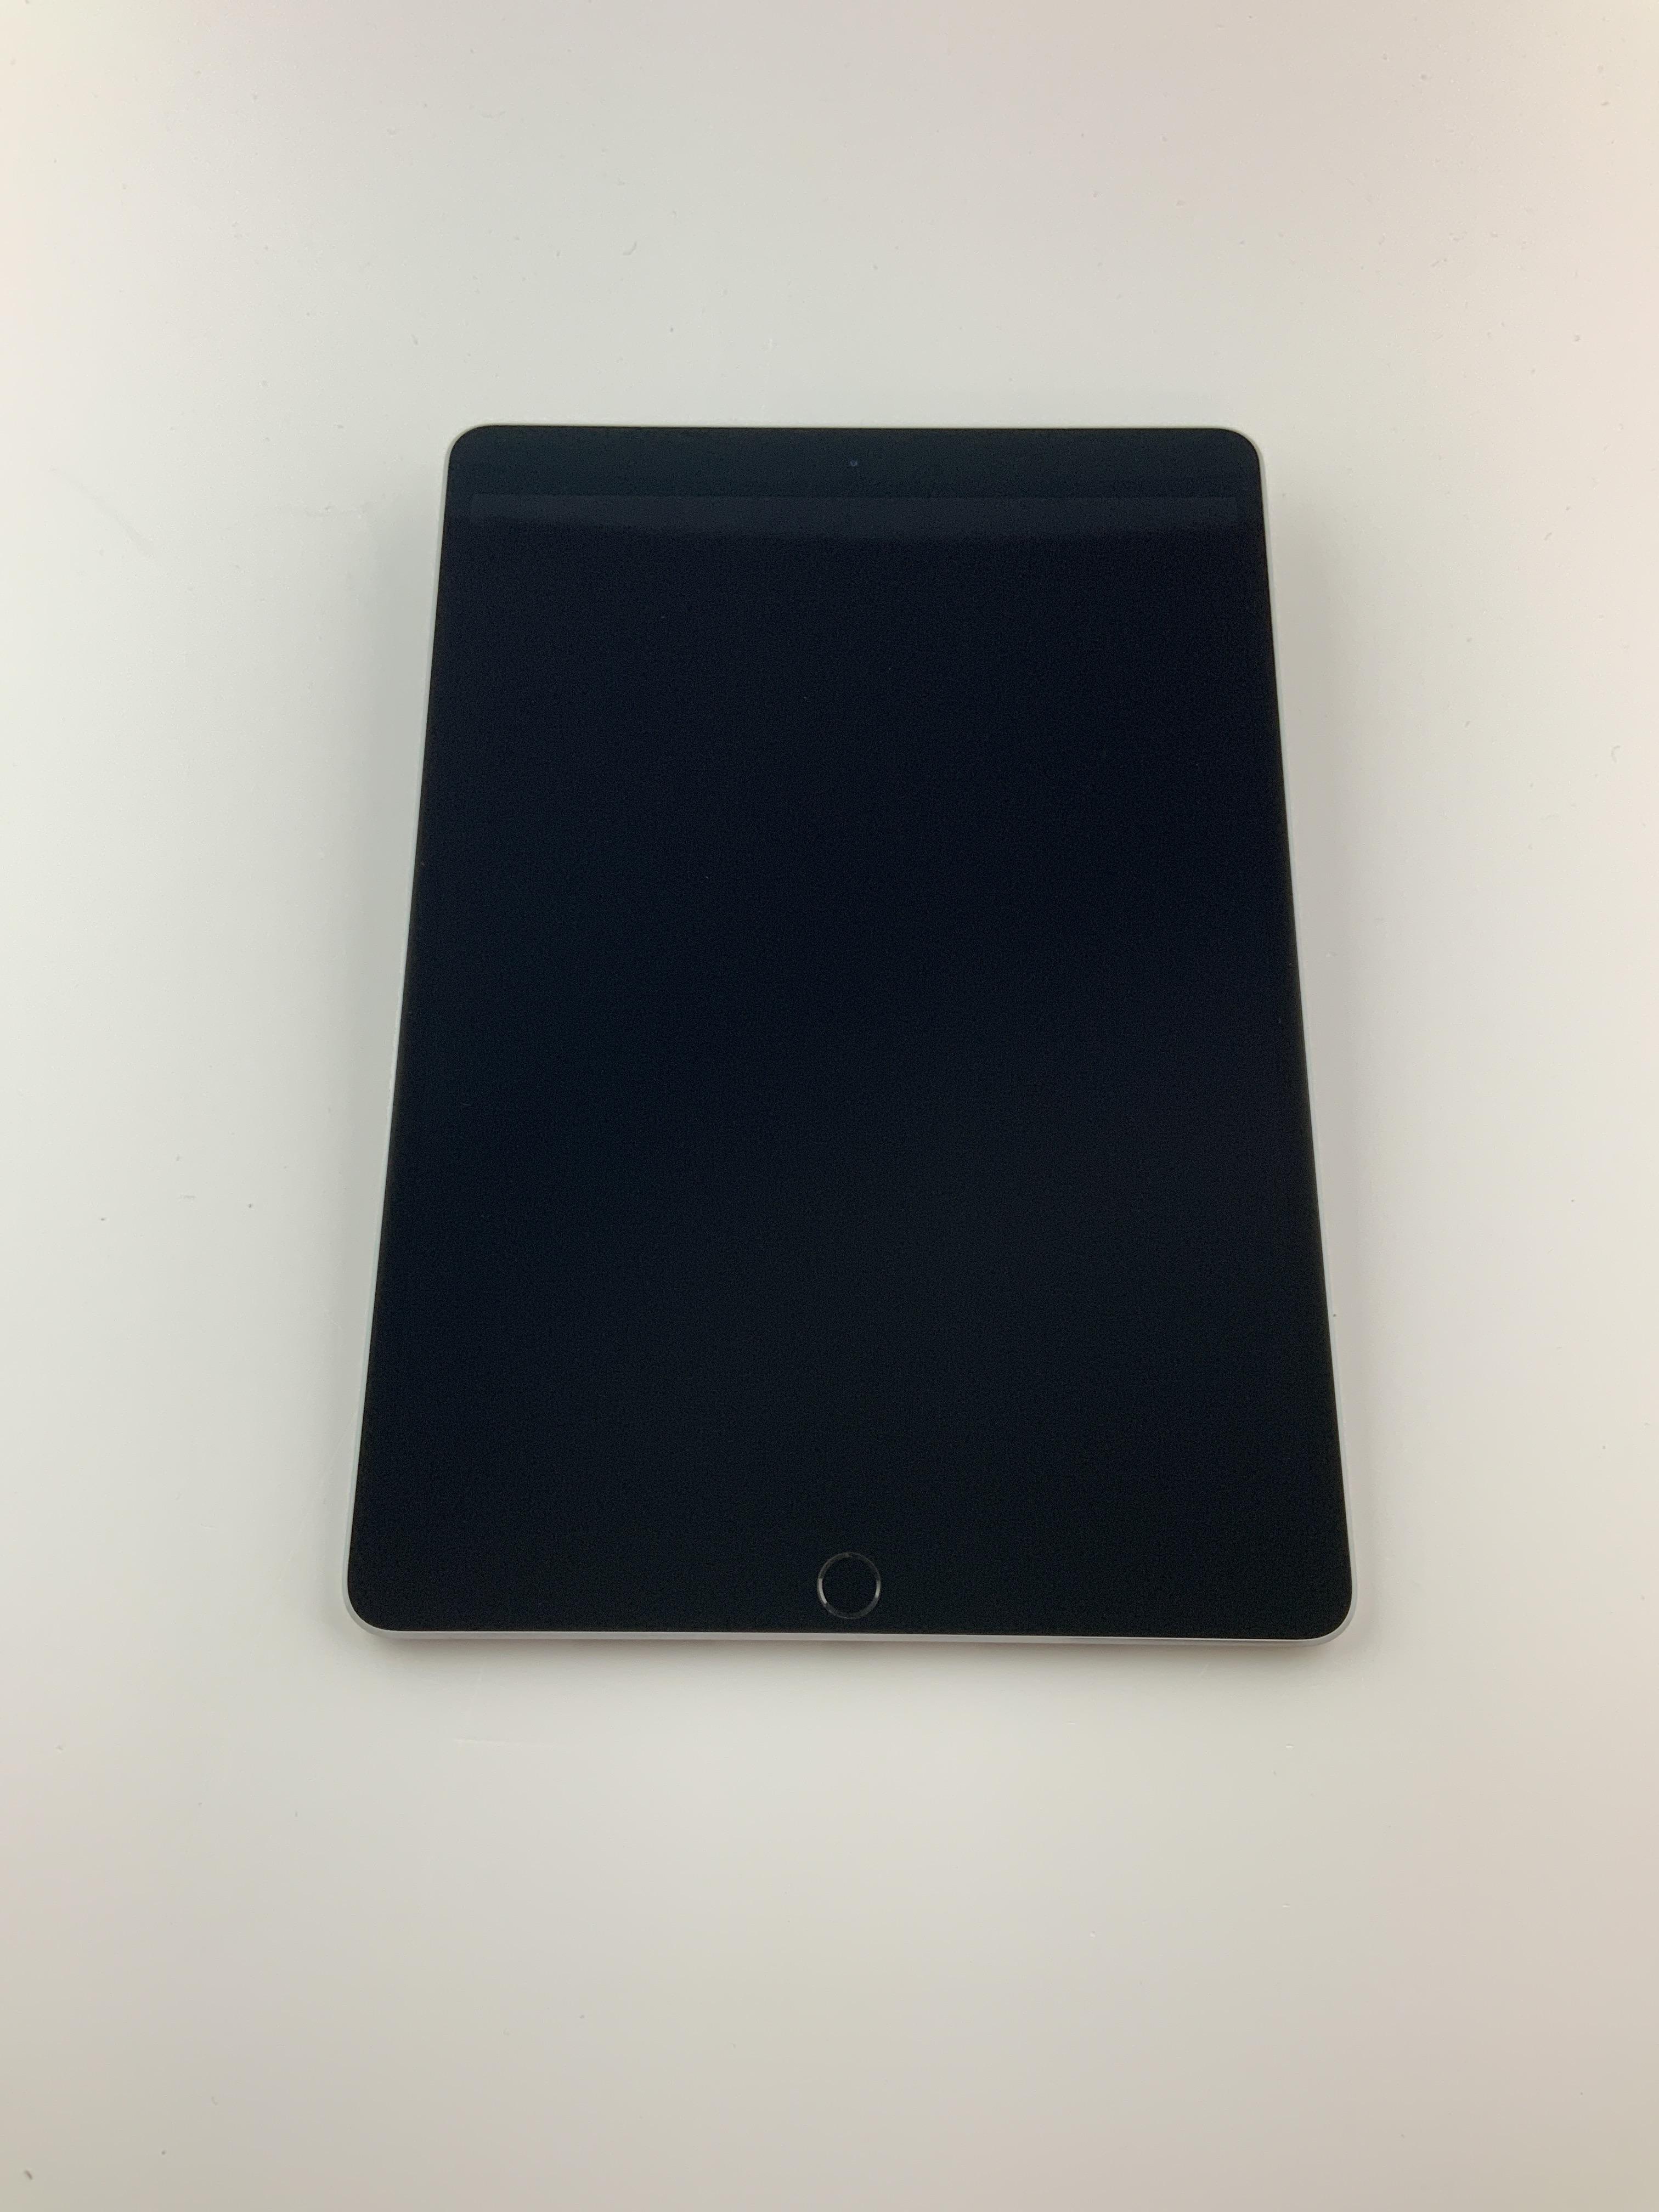 iPad Pro 10.5" Wi-Fi + Cellular 512GB, 512GB, Space Gray, imagen 1